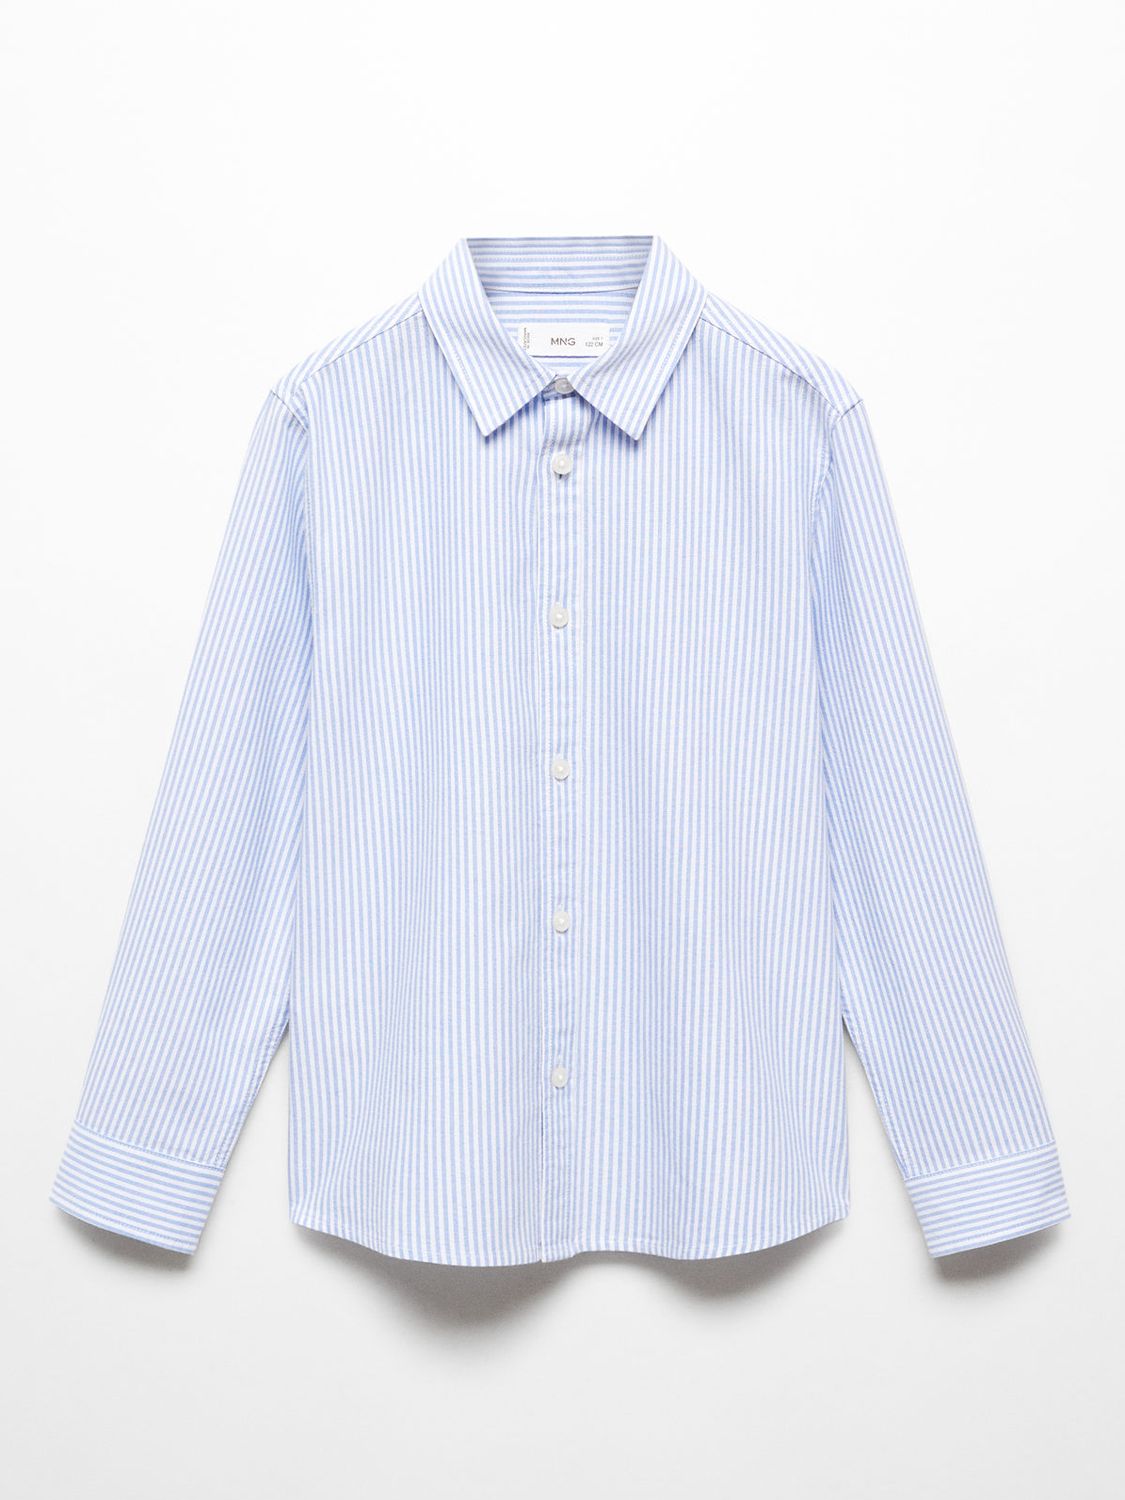 Mango Kids' Regular Fit Cotton Stripe Oxford Shirt, Medium Blue, 5 years